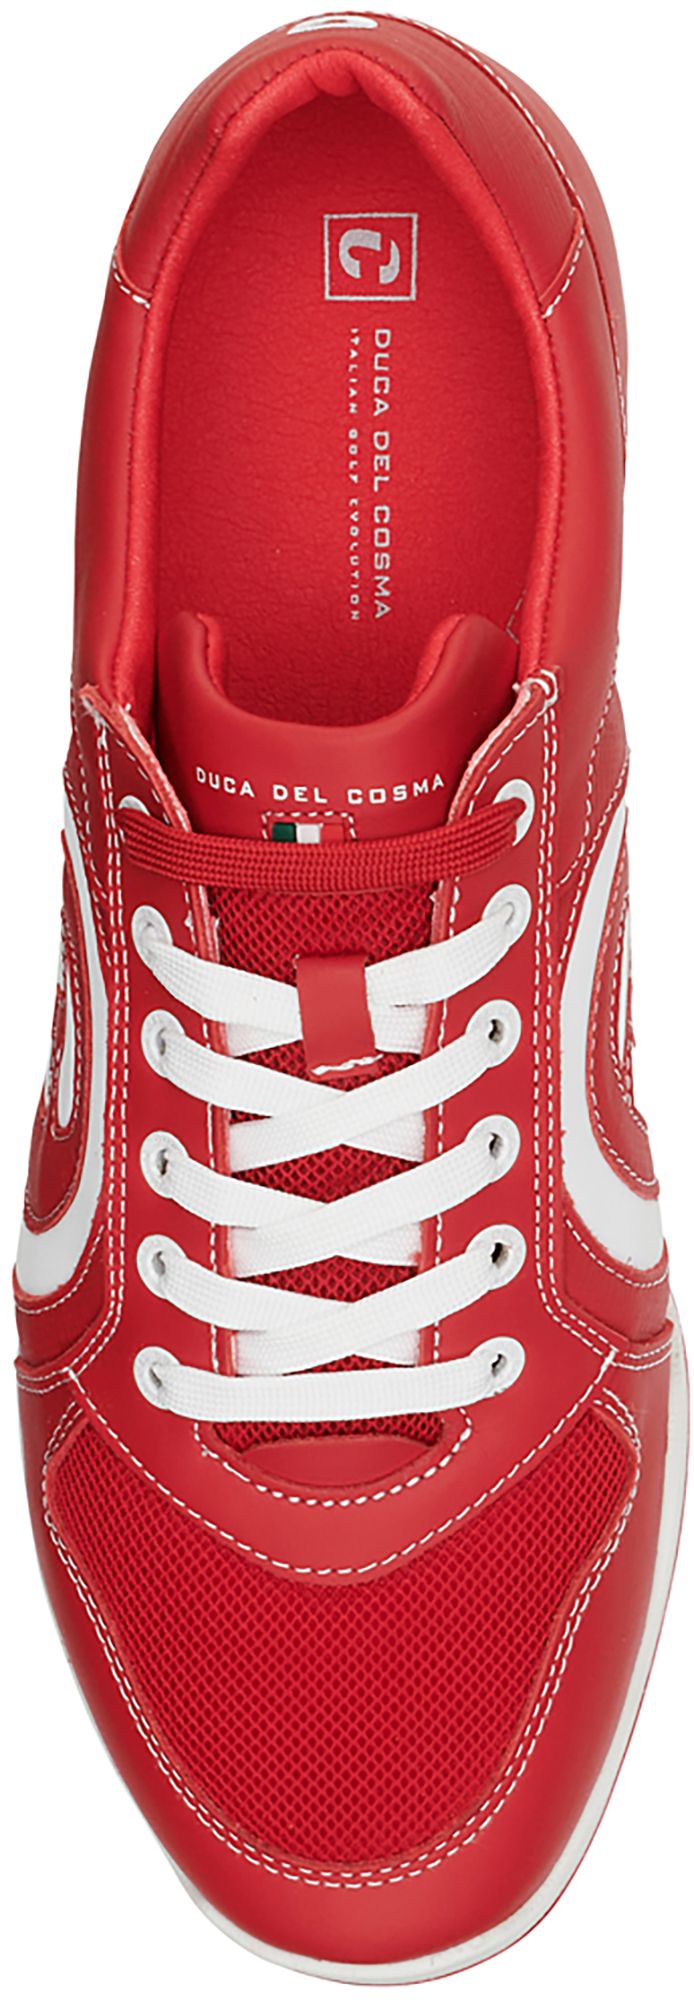 Duca Del Cosma Men's Kuba 2.0 Golf Shoes